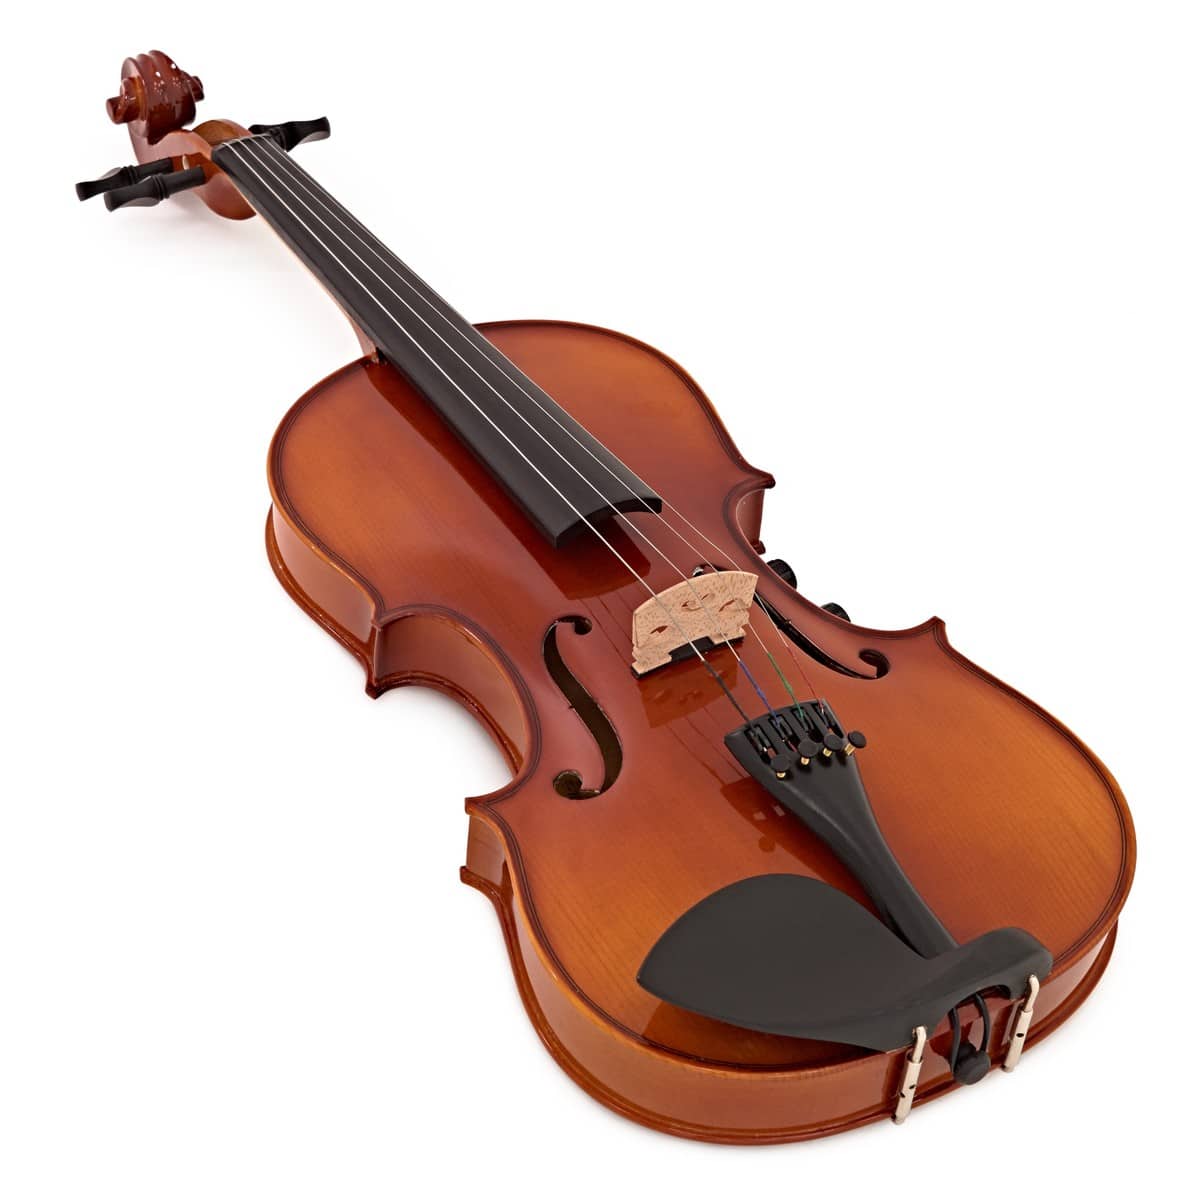 Caracteristicas del violin